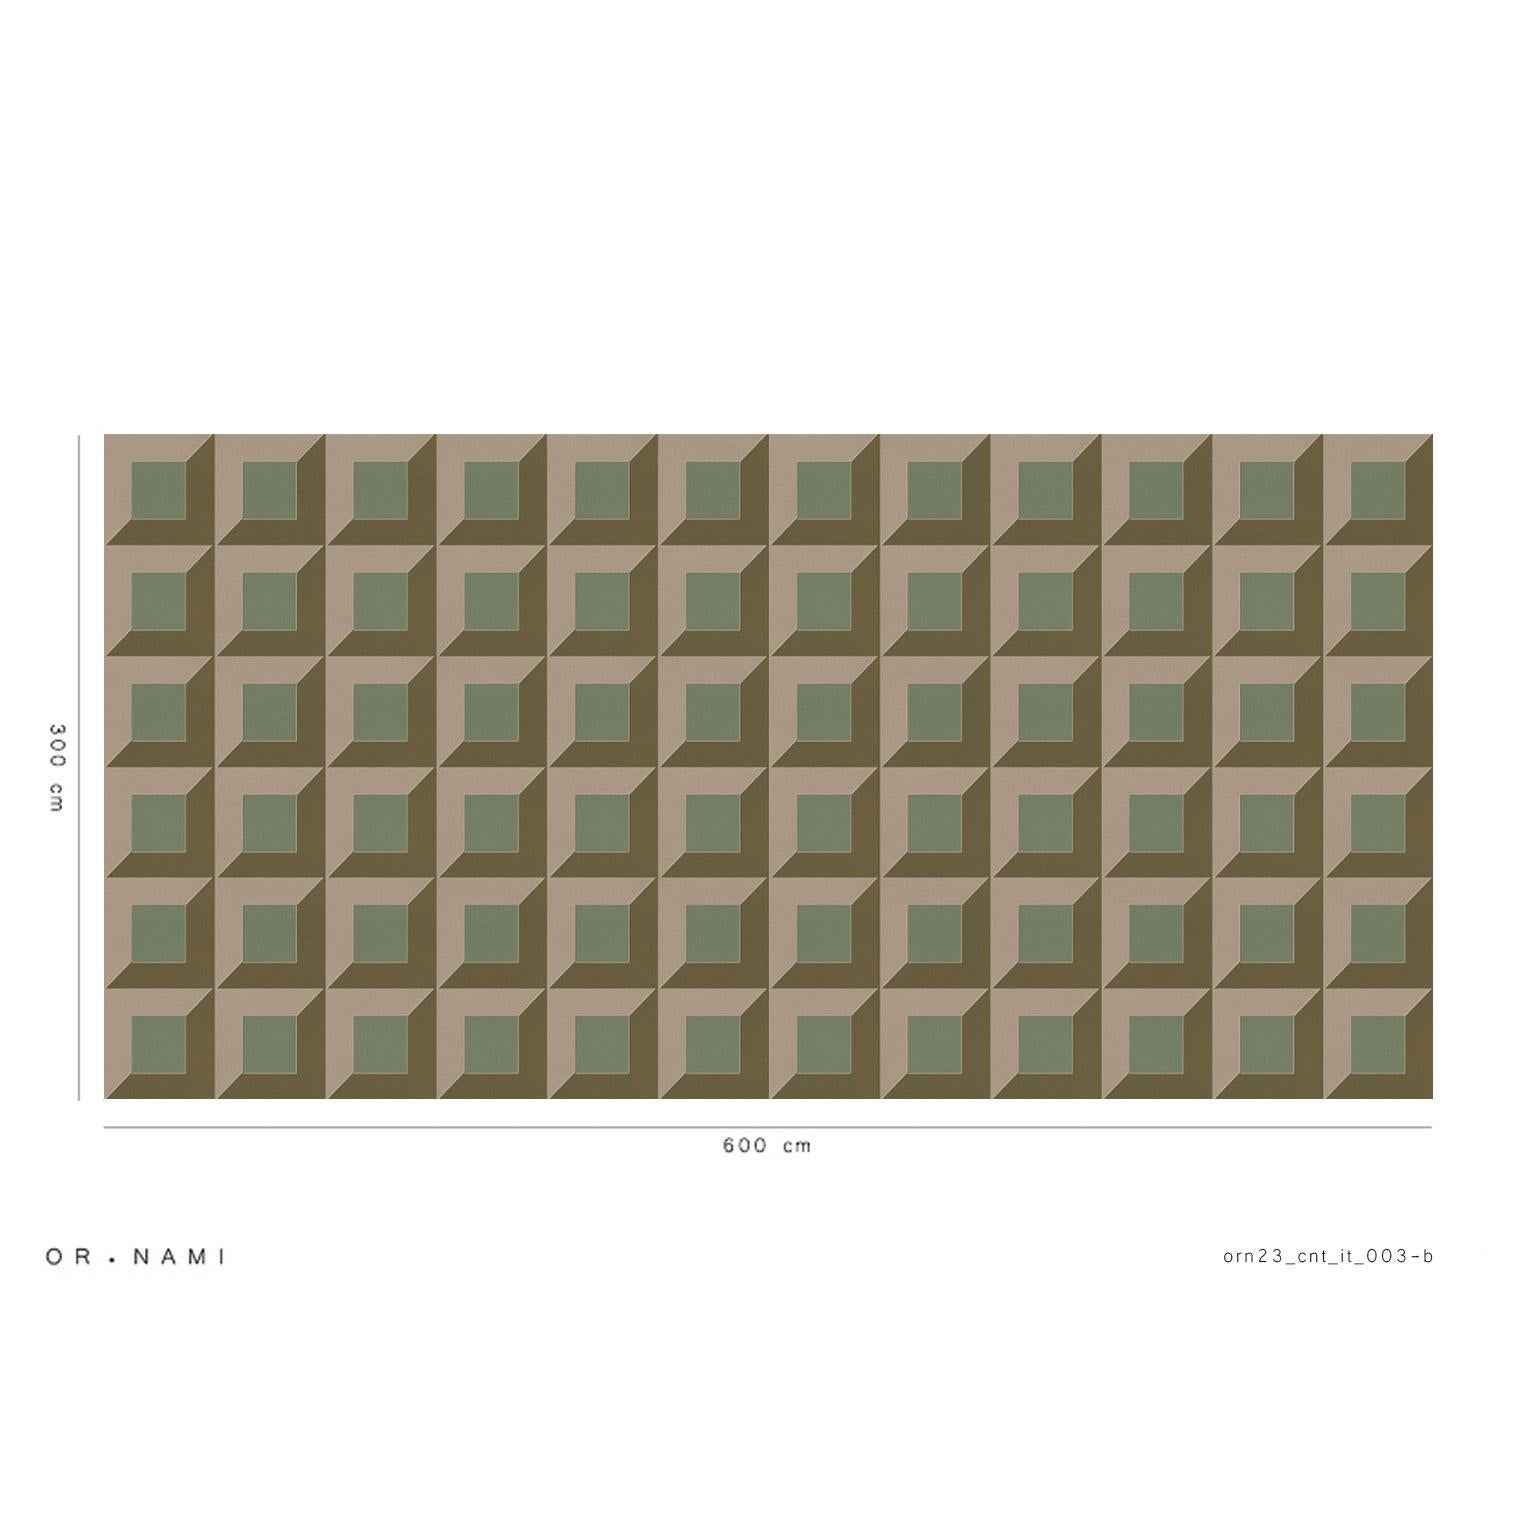 Ornami Still Life Geometric Square Vinyl Wallpaper Made in Italy Digital Print For Sale 1